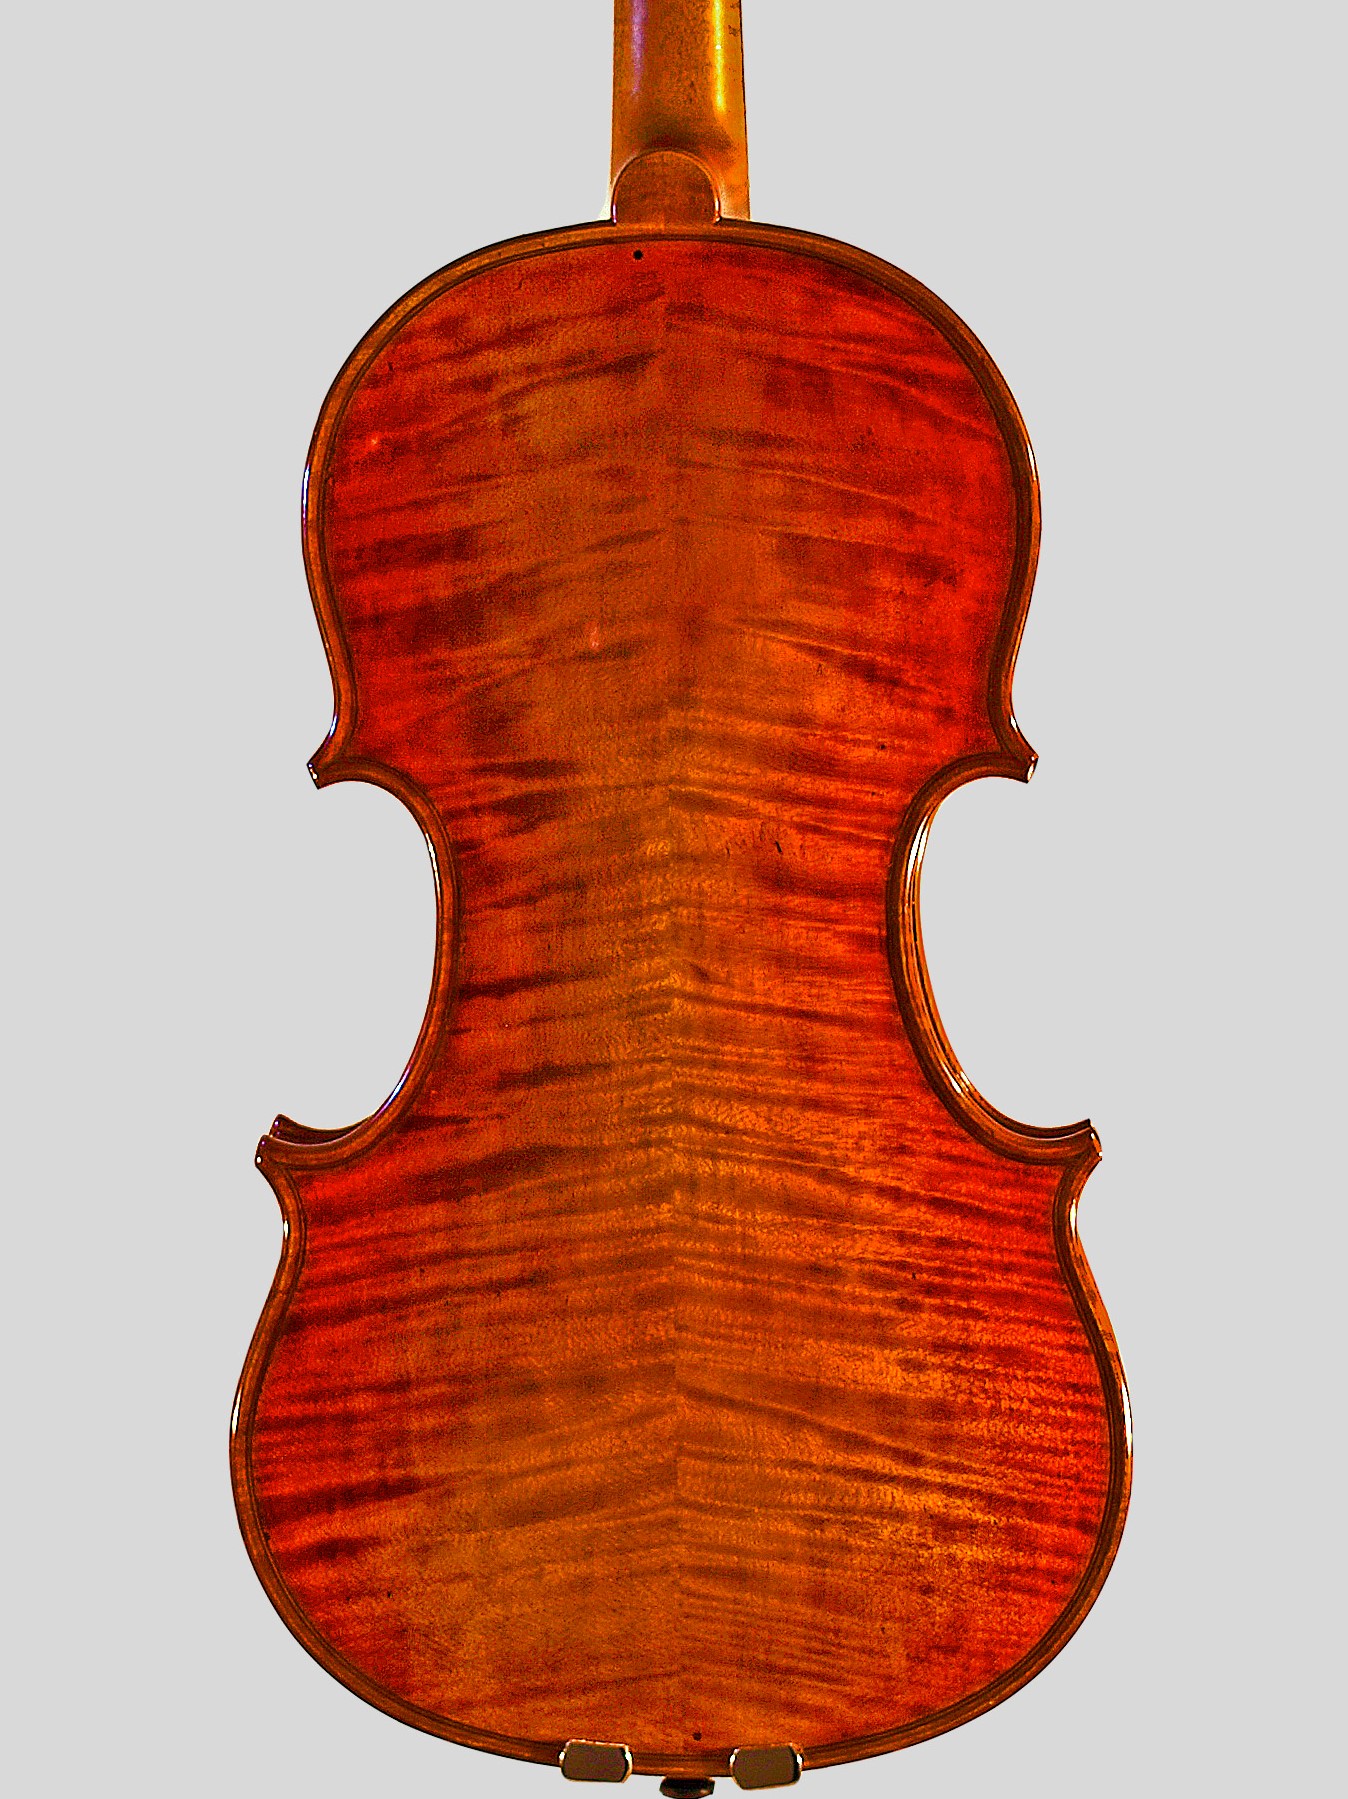 *Patrick Seaux, Italy - Padova, 2016, Model; "Stradivari-Antoniazzi" 北イタリアの学園都市パドヴァで弦楽器製作を行なう現代巨匠:パトリック・ショー氏は、[!!自身のWEBSITEを持たず、さらに過大な宣伝プロモーションや広告活動の一 […]